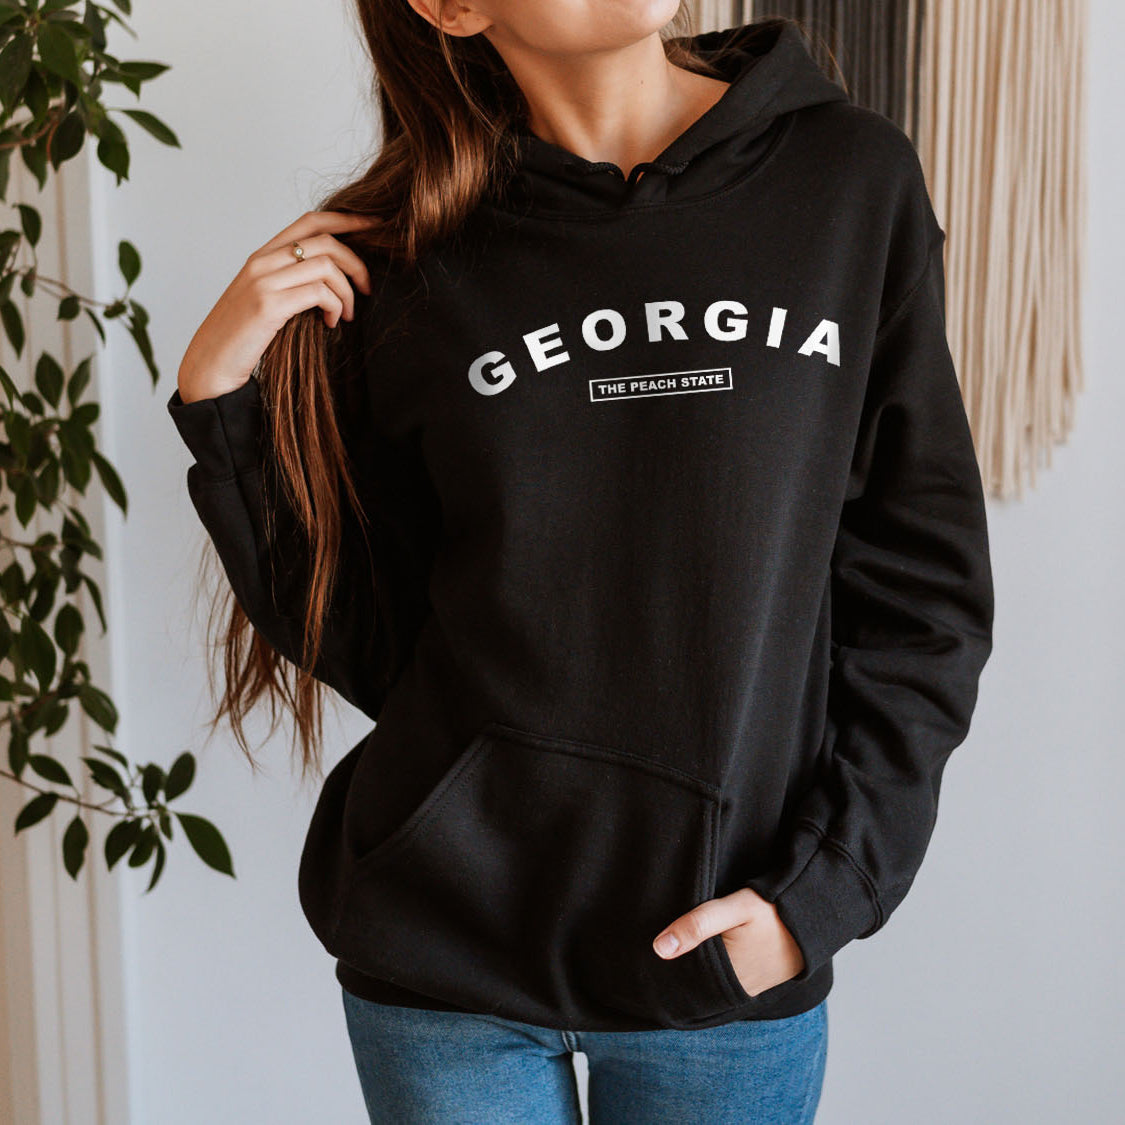 Georgia The Peach State Hoodie - United States Name & Slogan Minimal Design Printed Hoodie